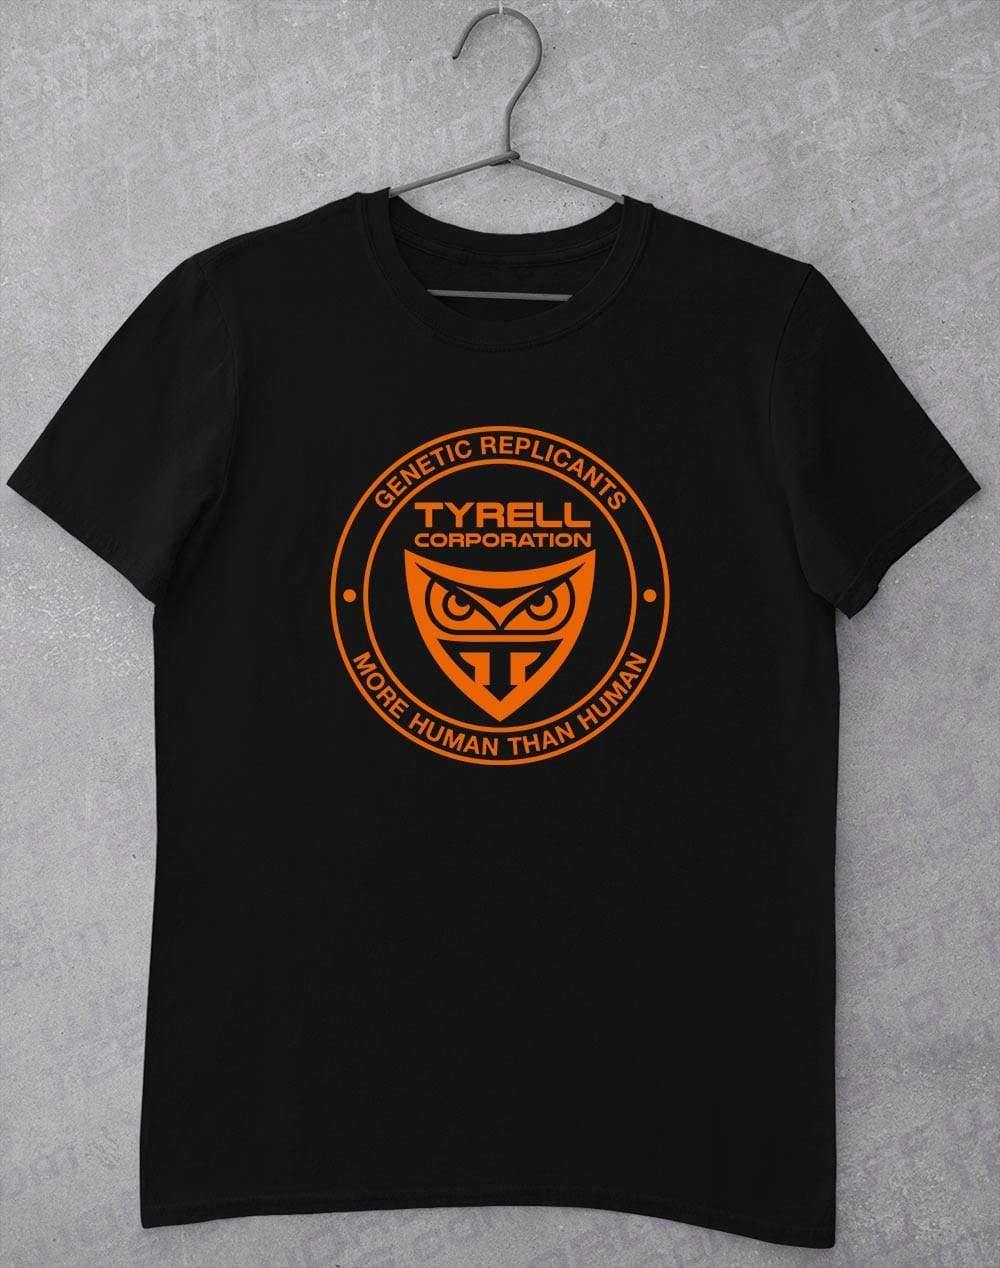 Tyrell Corp Circular T-Shirt S / Black  - Off World Tees